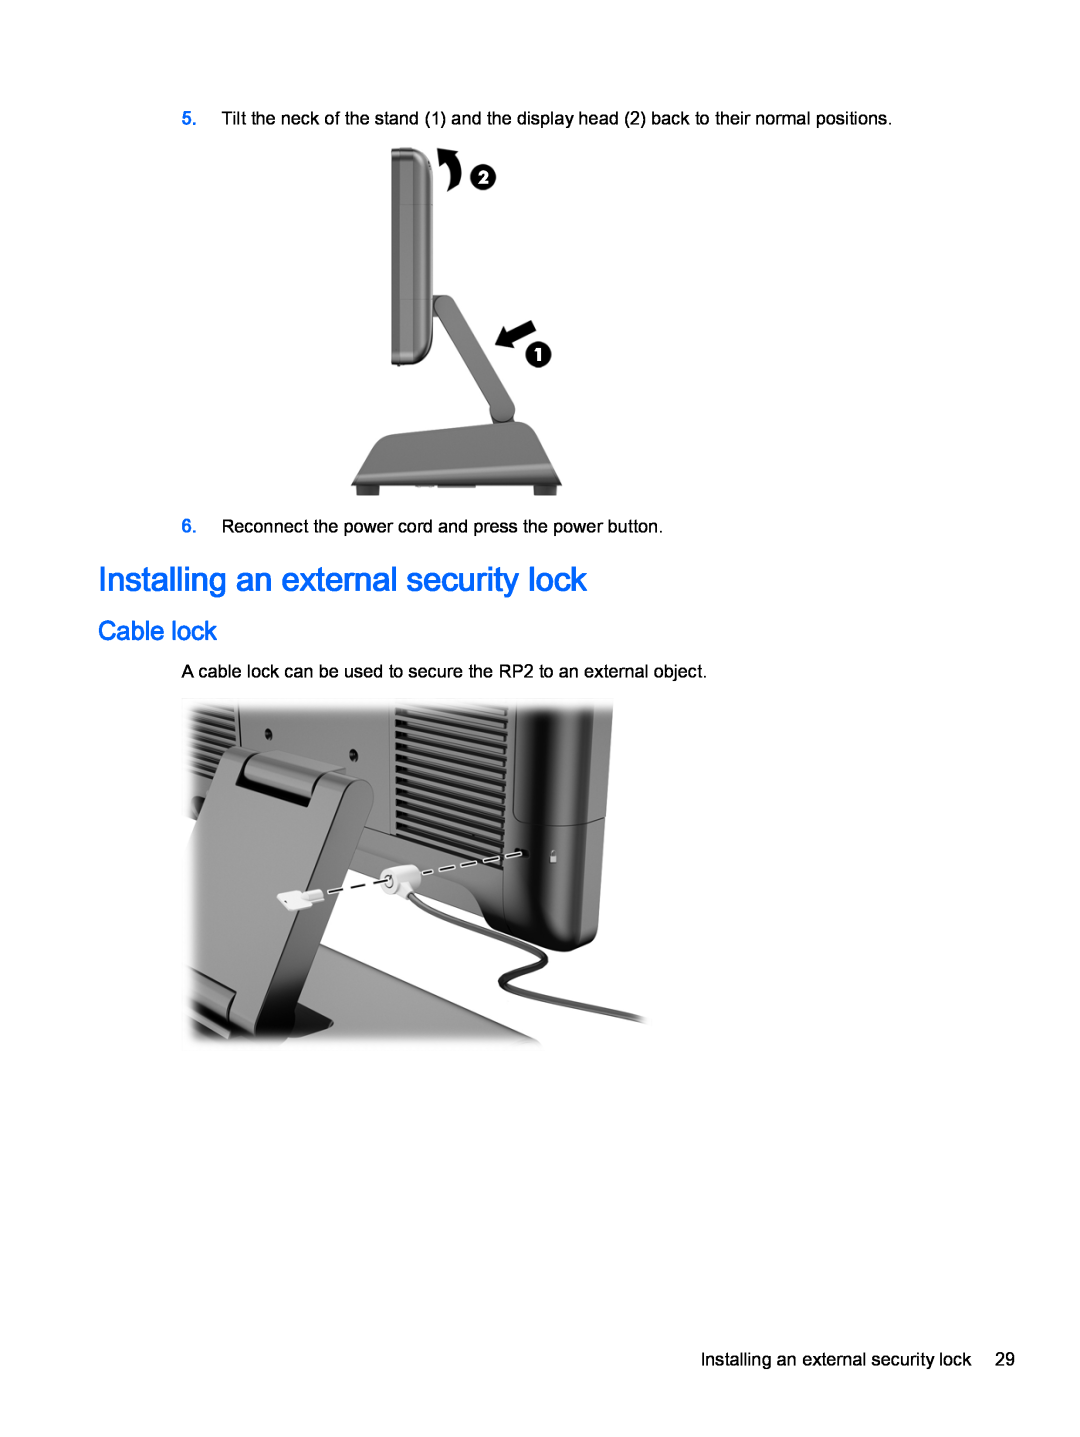 HP 2000 Base Model manual Installing an external security lock, Cable lock 